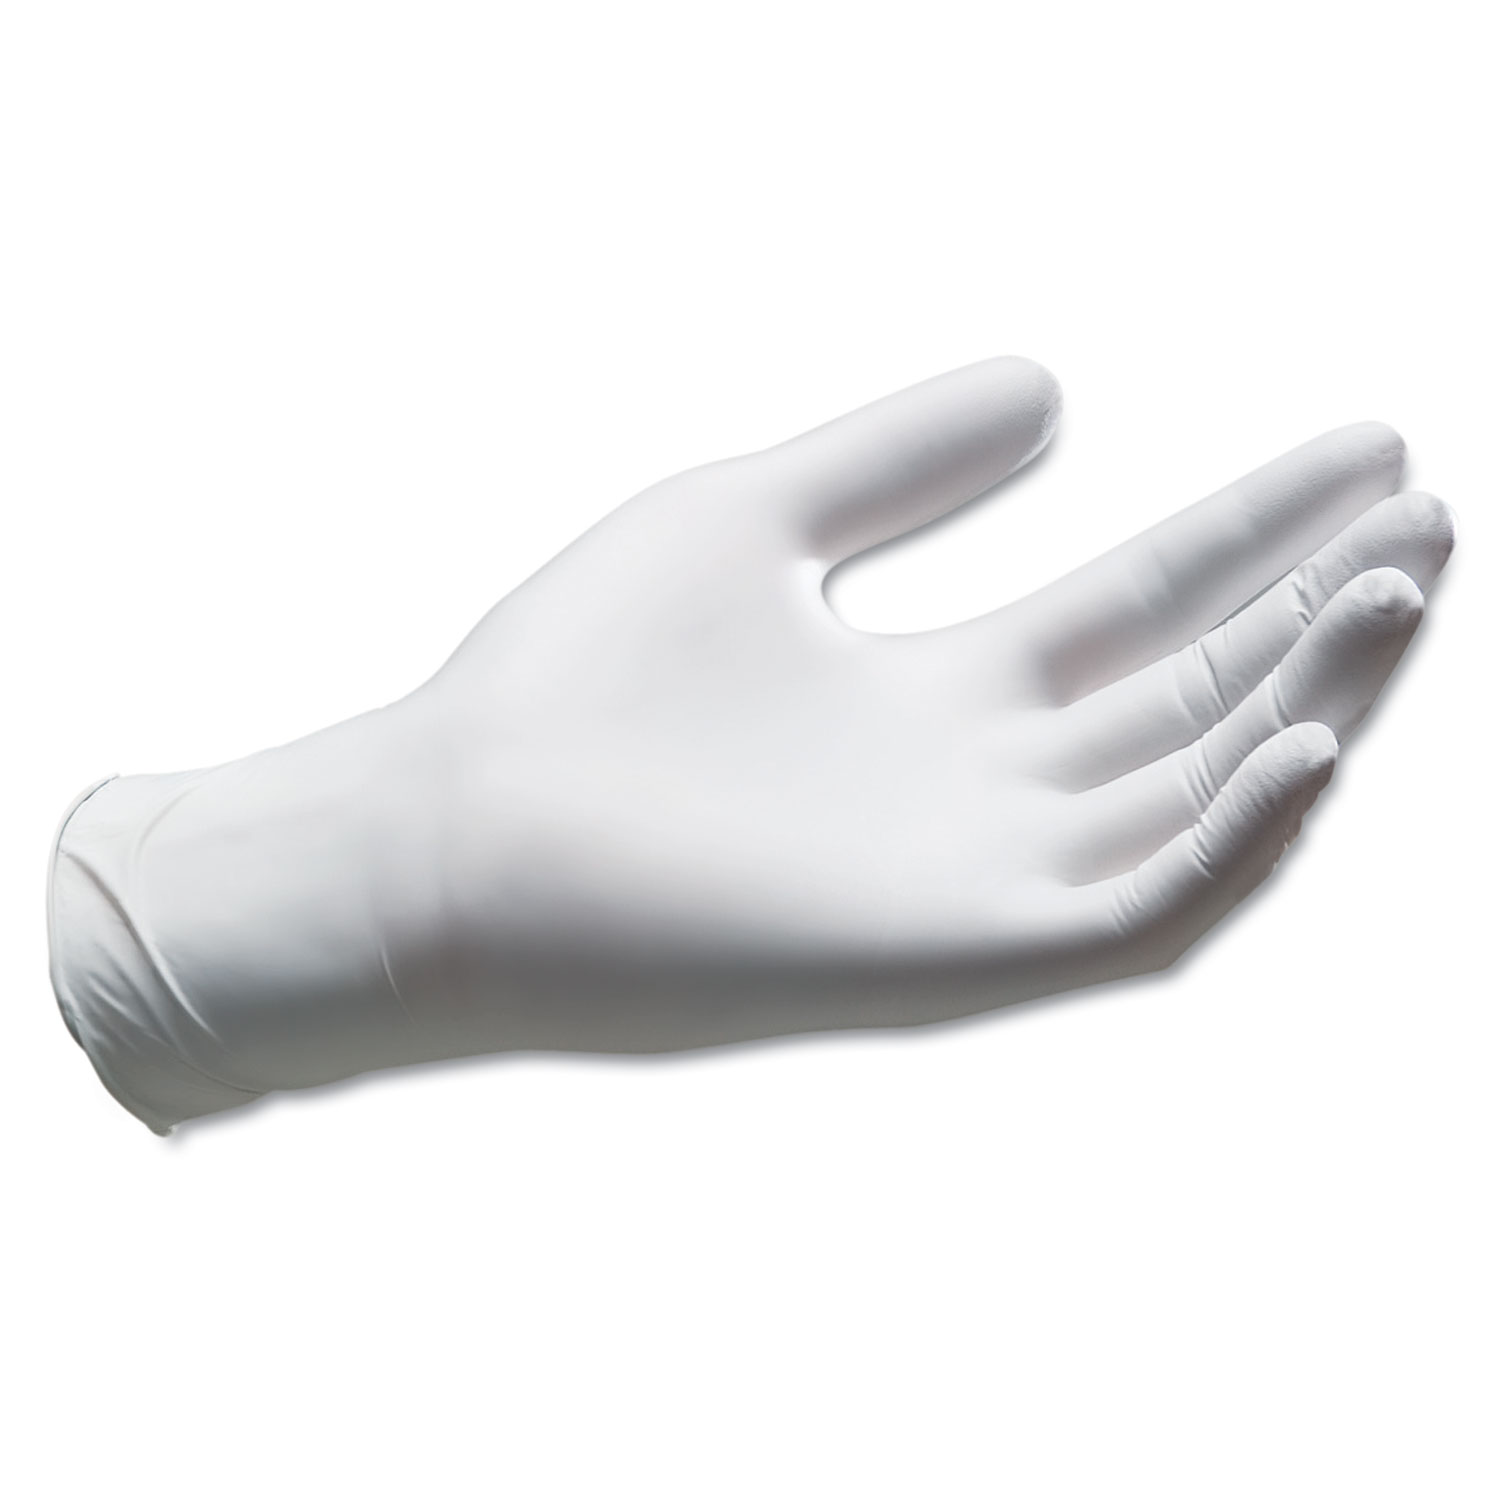  Kimberly-Clark Professional* 50706 STERLING Nitrile Exam Gloves, Powder-free, Gray, 242 mm Length, Small, 200/Box (KCC50706) 